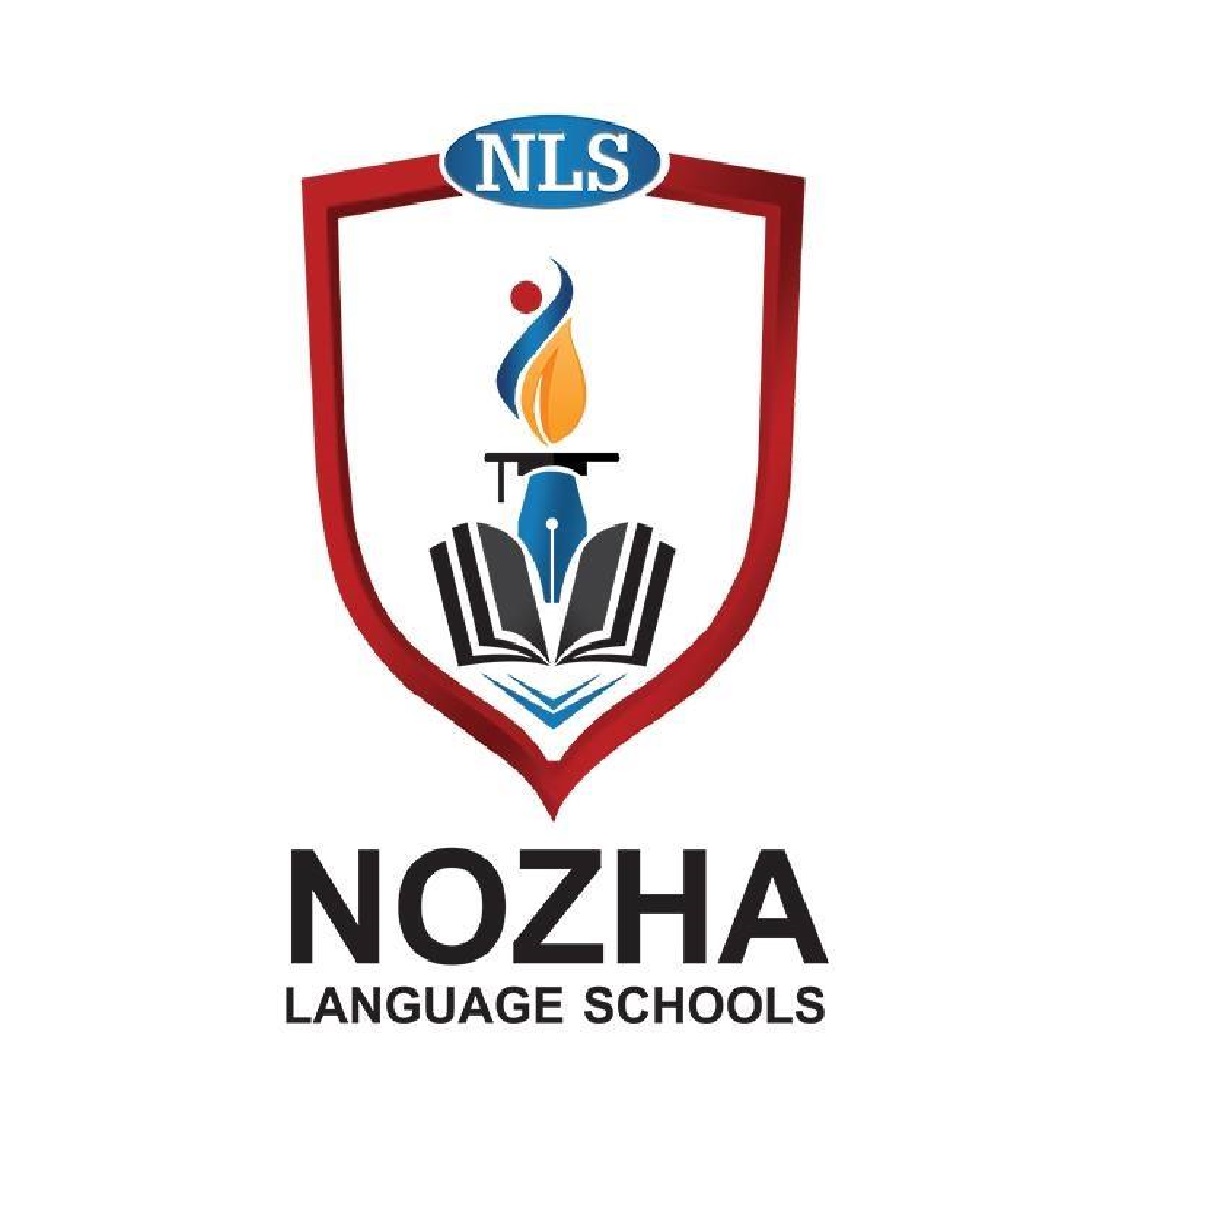 Nozha language school